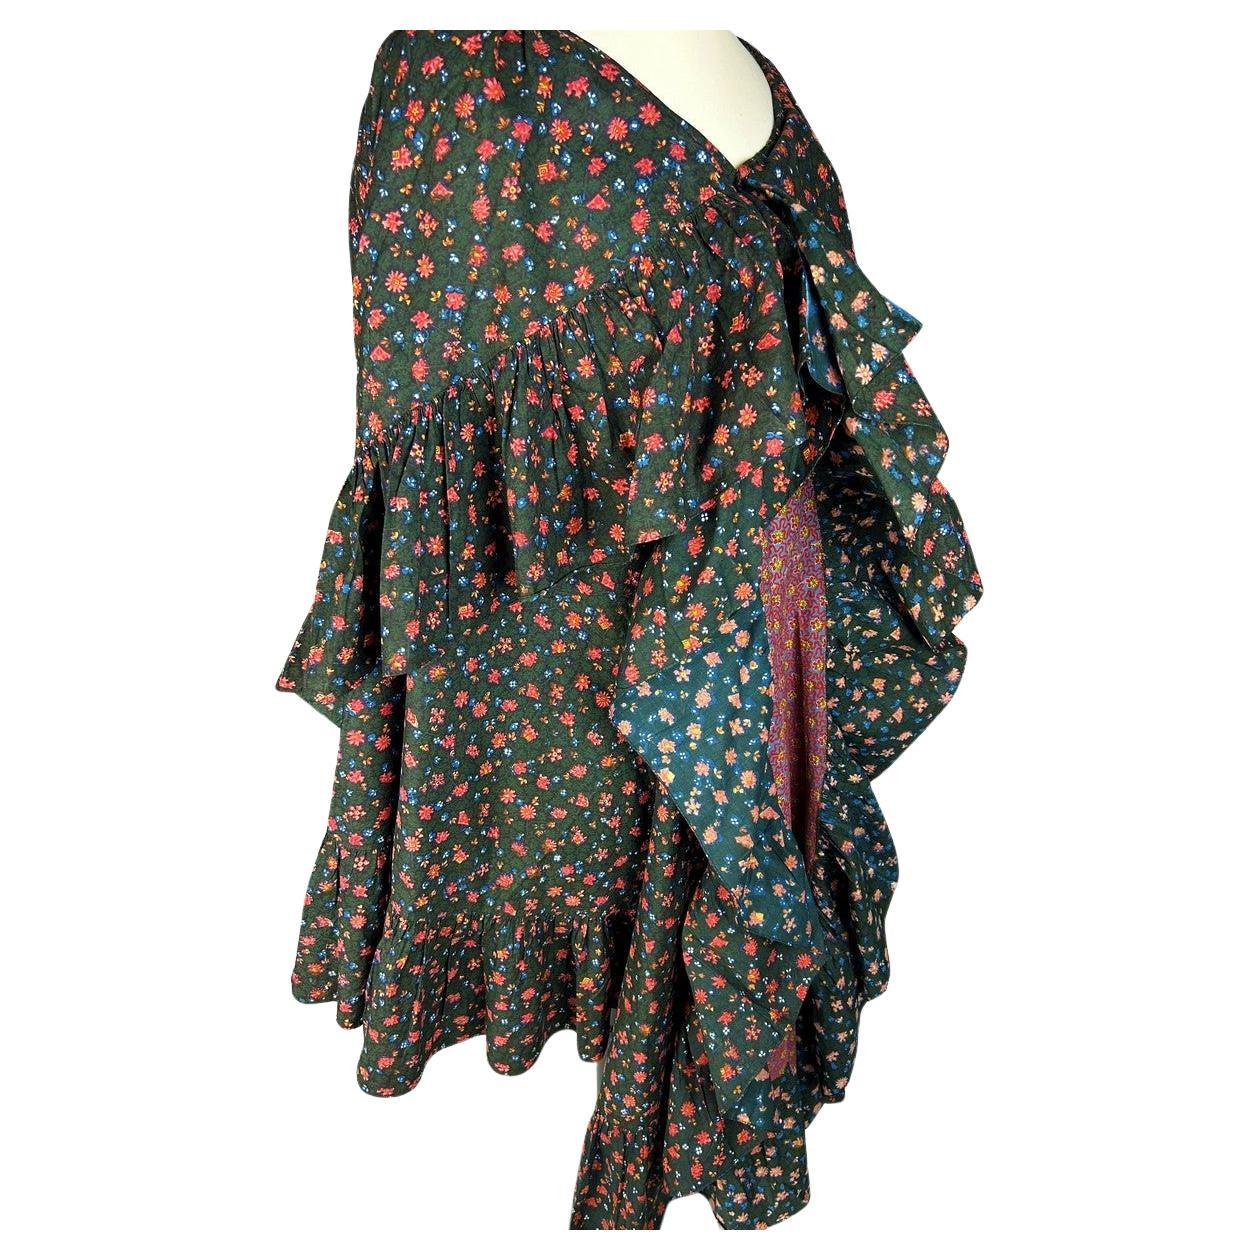 A Printed Cotton cloak Visite in Baton Rompu - Provence Circa 1820-1850 For Sale